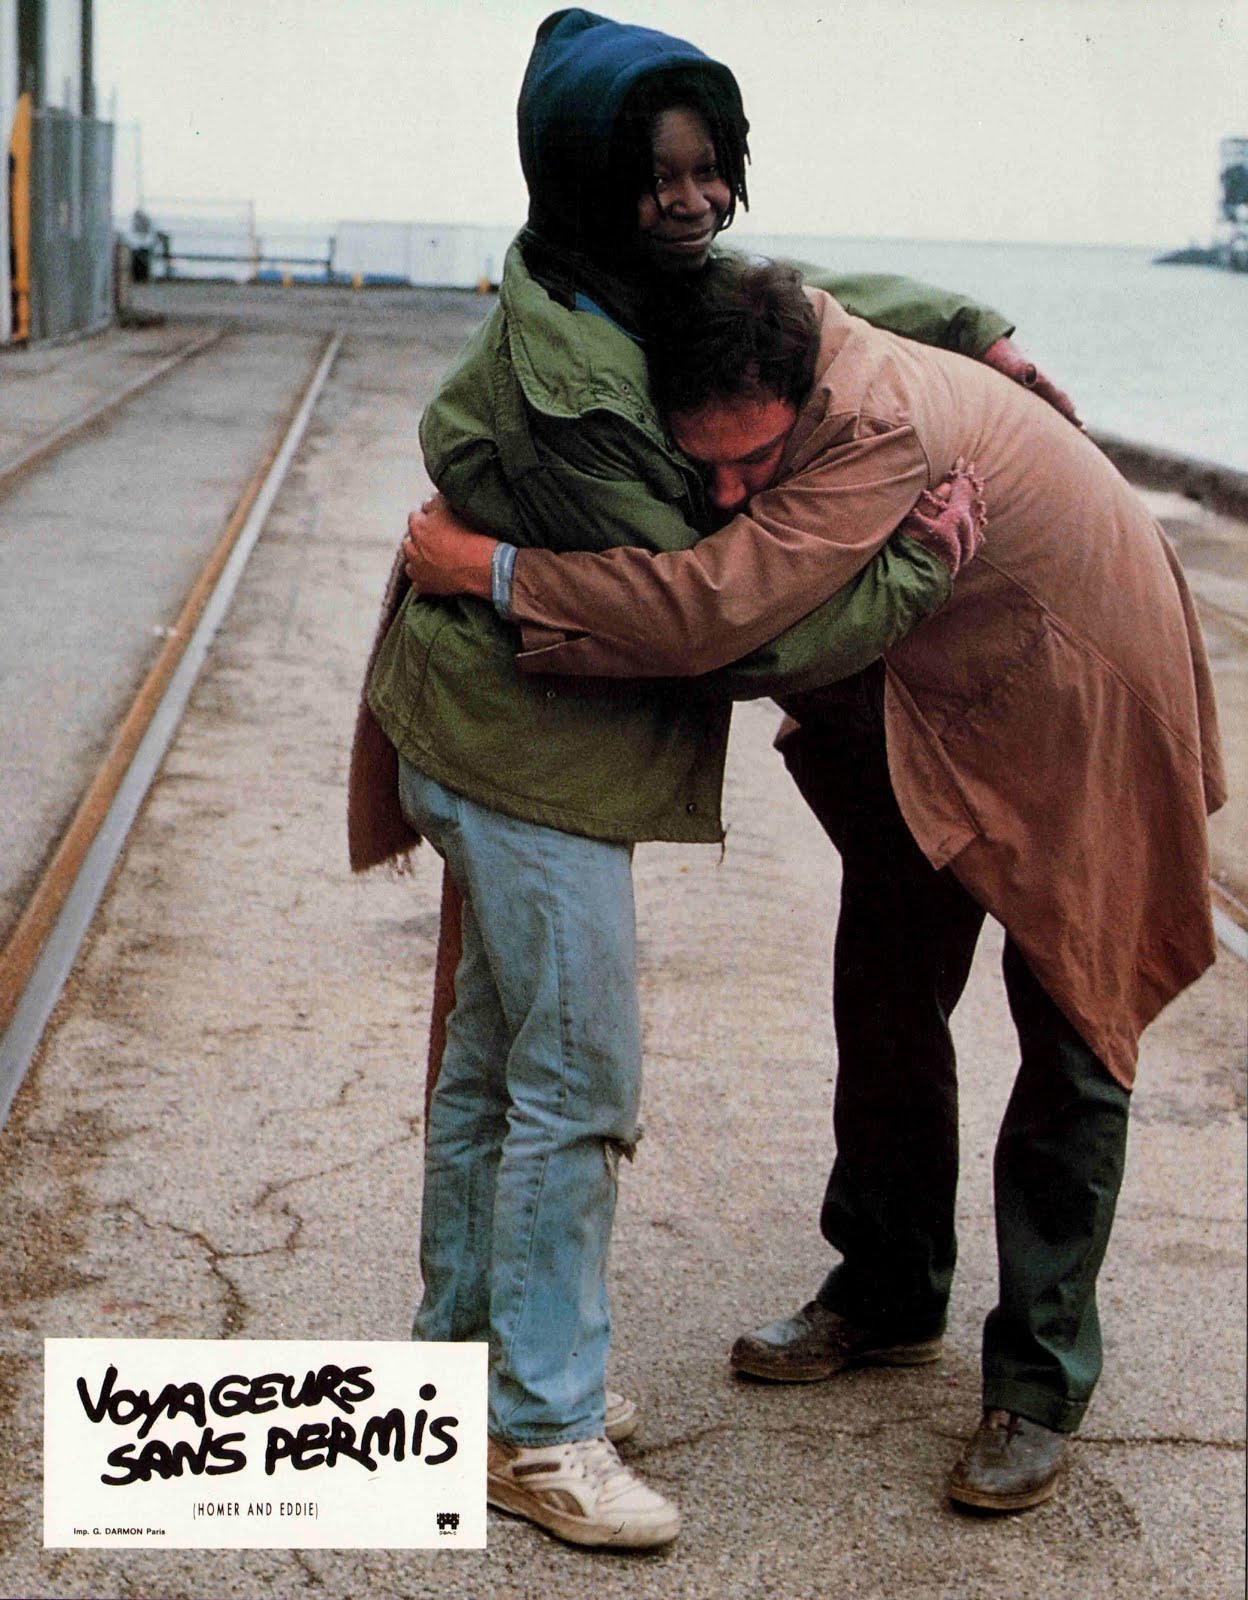 Voyageurs sans permis (1988) Andrei Konchalovsky - Homer and Eddie (25.01.1988 / 03.1988)